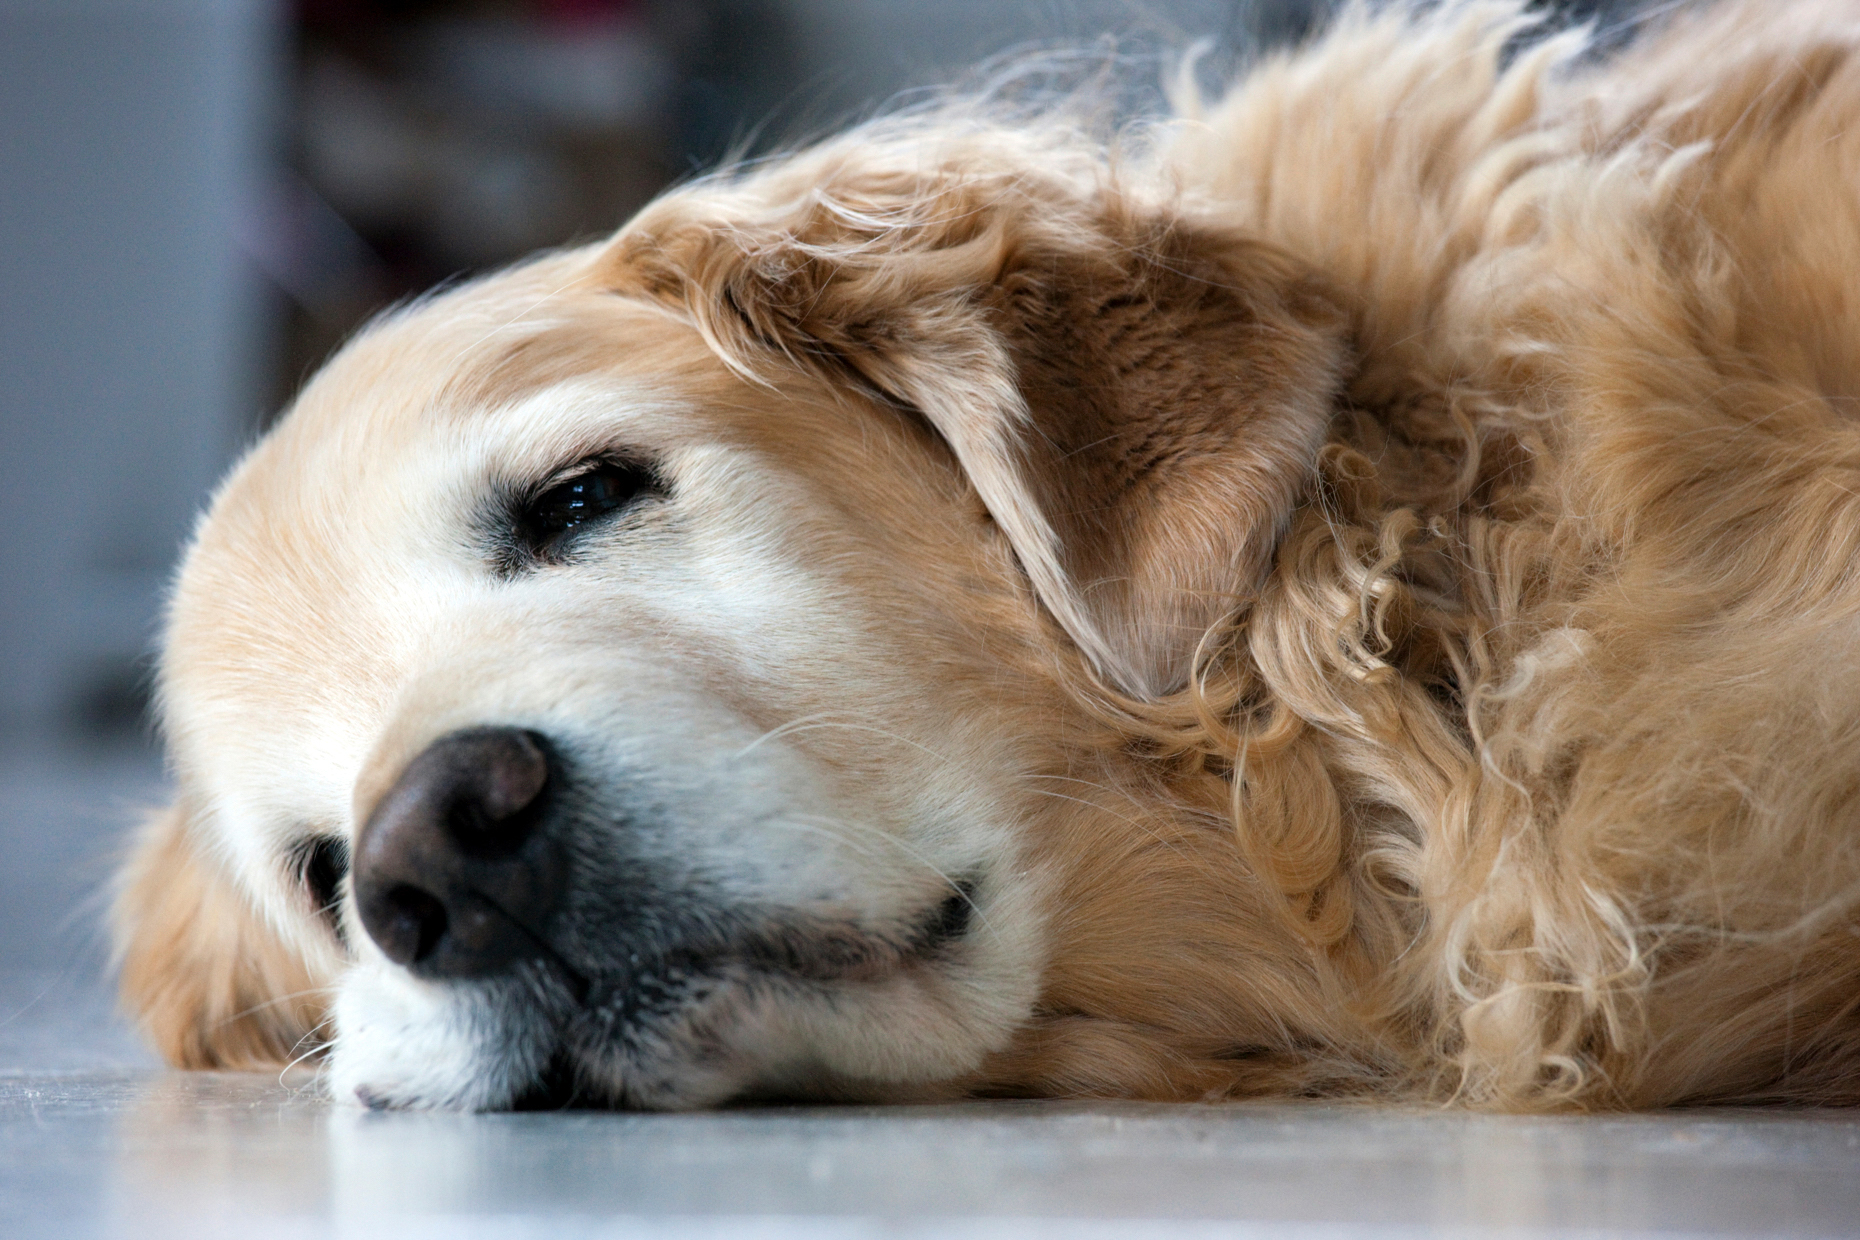 Older female Golden Retriever dog sleeping on a vinyl kitchen floor.